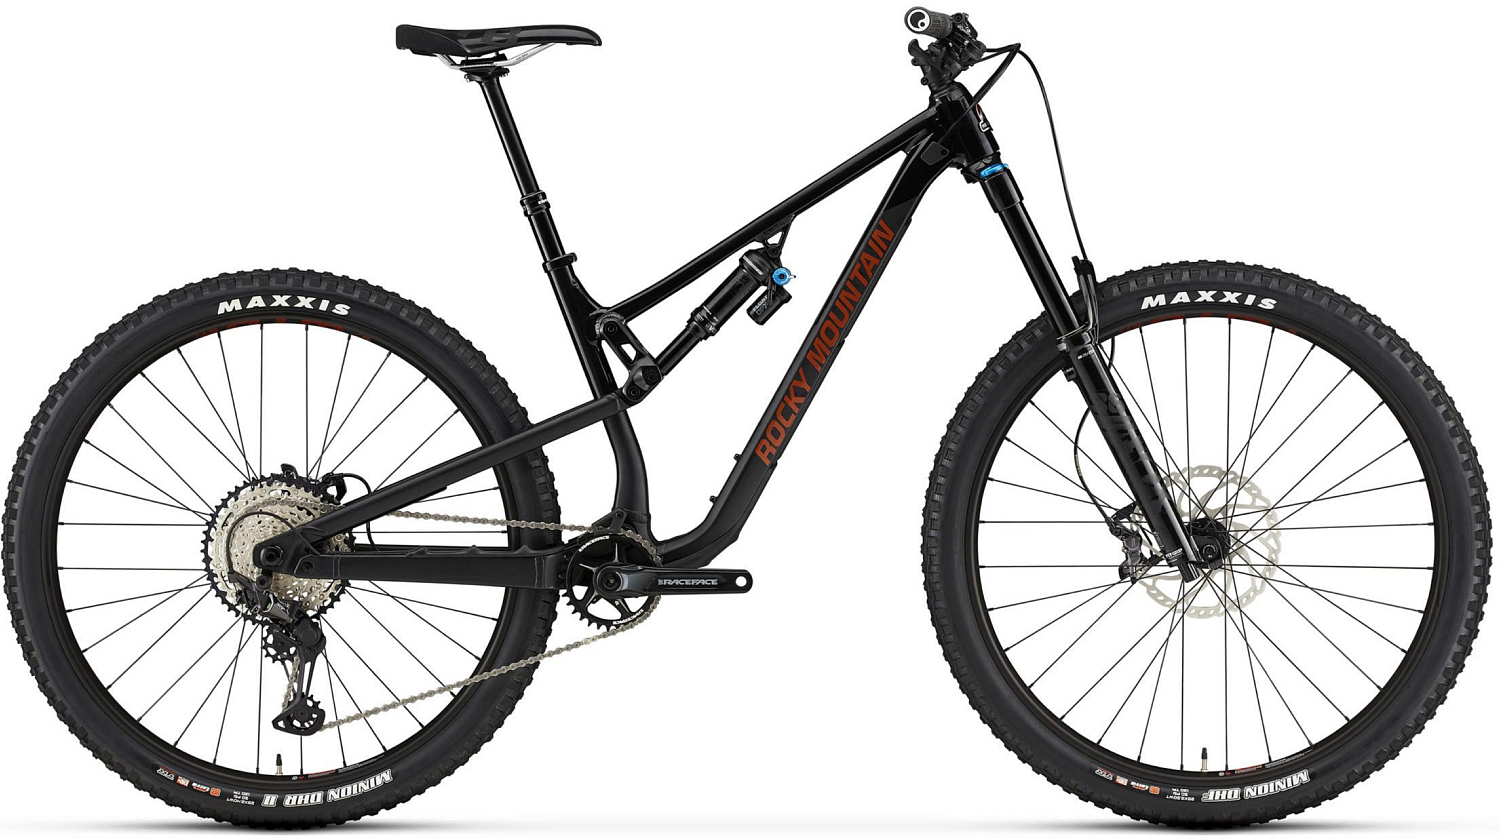 Велосипед Rocky Mountain Altitude A50 29 2021 Black/Brown